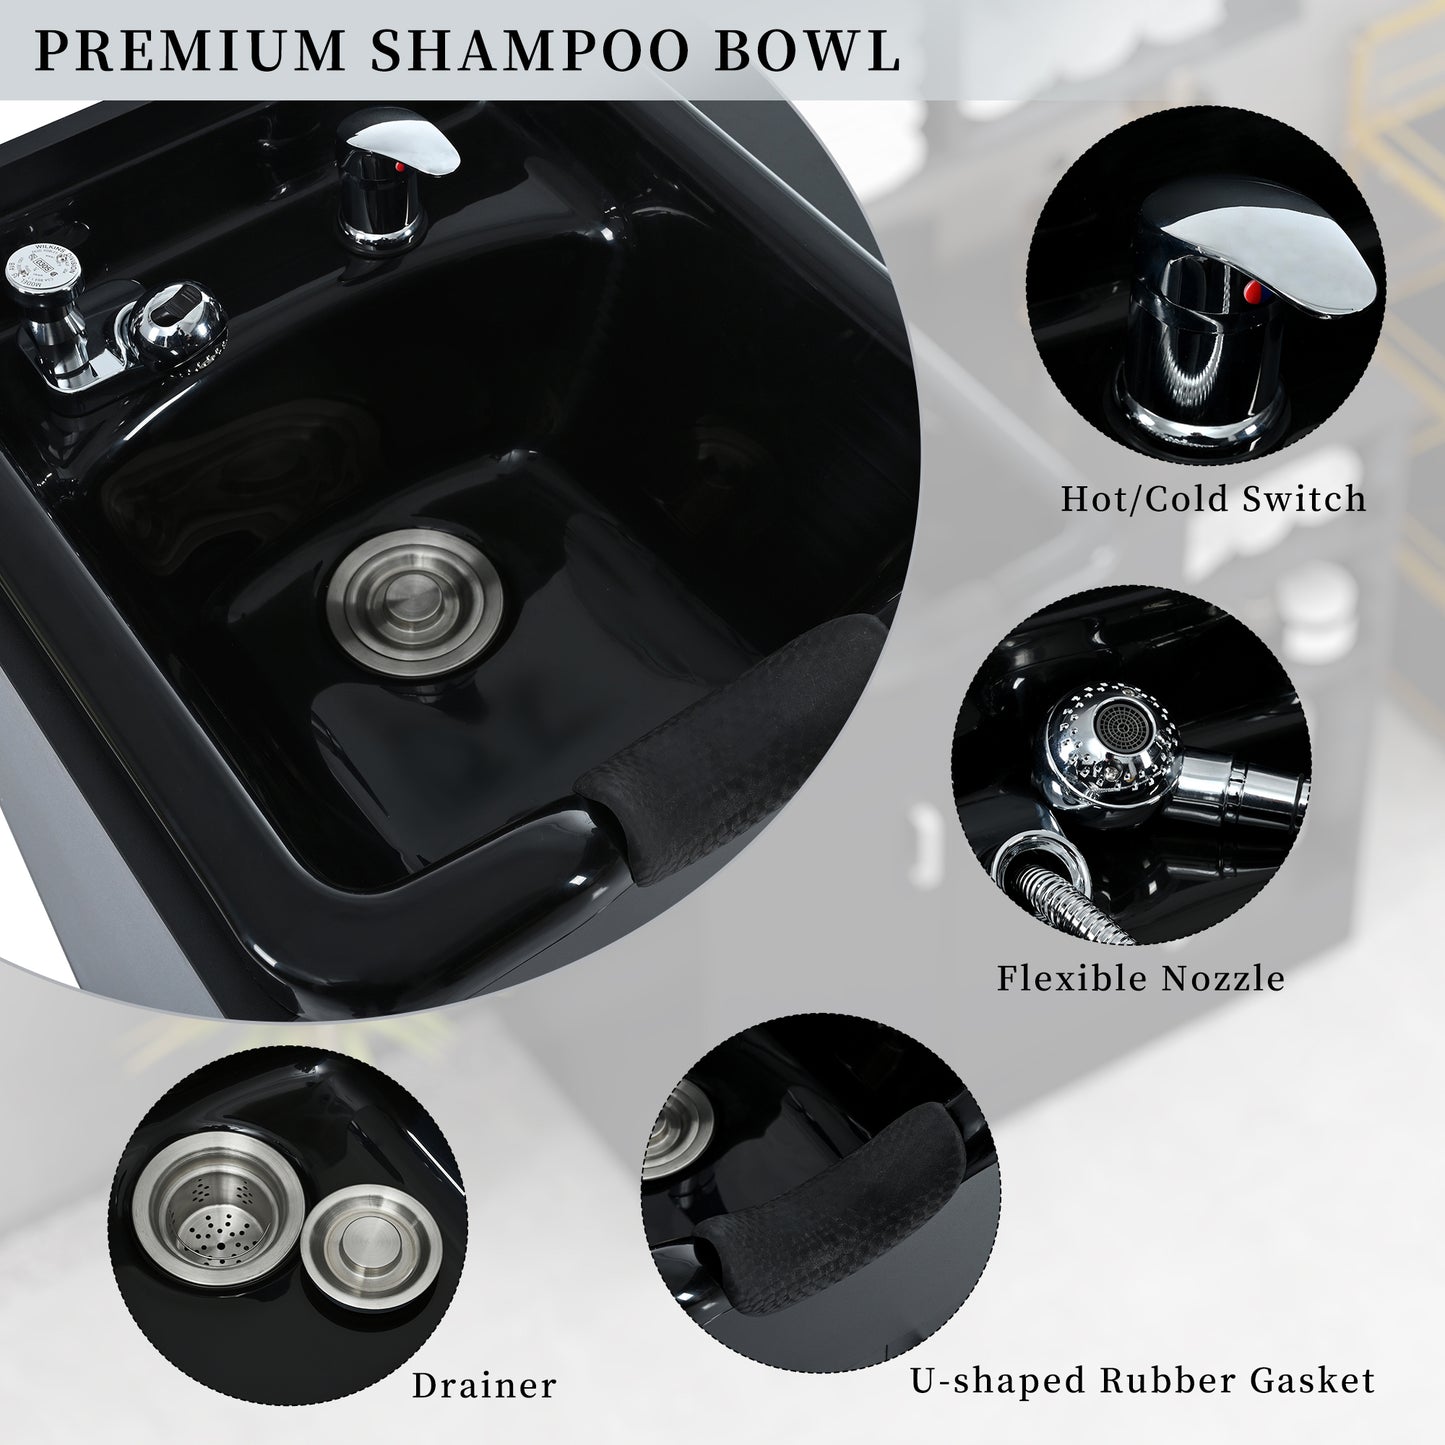 Shampoo Backwash Station for Salons,Salon Station with Shampoo Bowl & Storage Layer,Salon Equipment for Spa Beauty